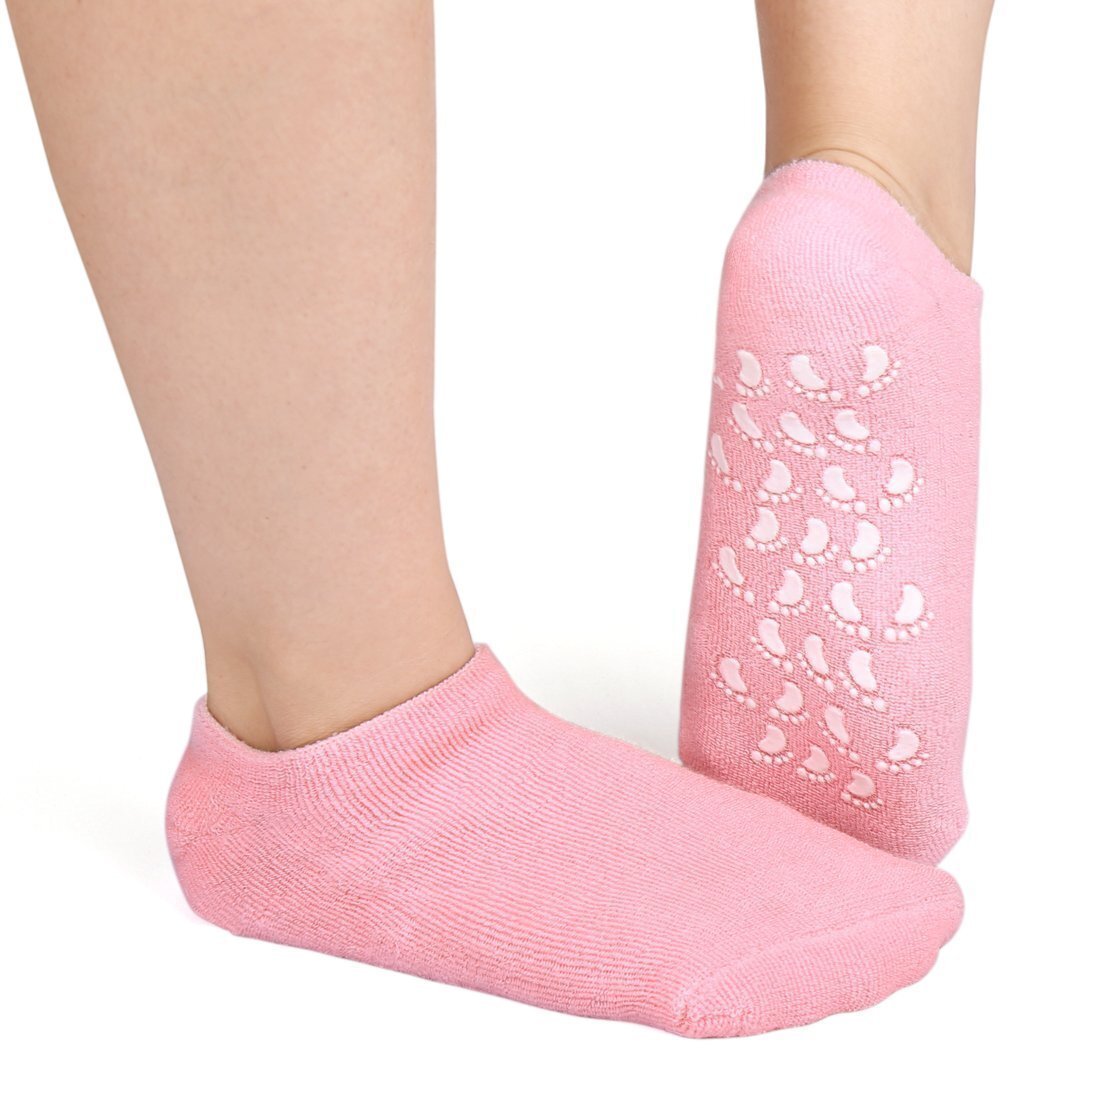 Спа носочки. Spa Gel Socks носки. Увлажняющие гелевые носки Spa Gel Socks 1 пара. RZ-439 гелевые носочки Spa Gel Socks. Силиконовые носки.